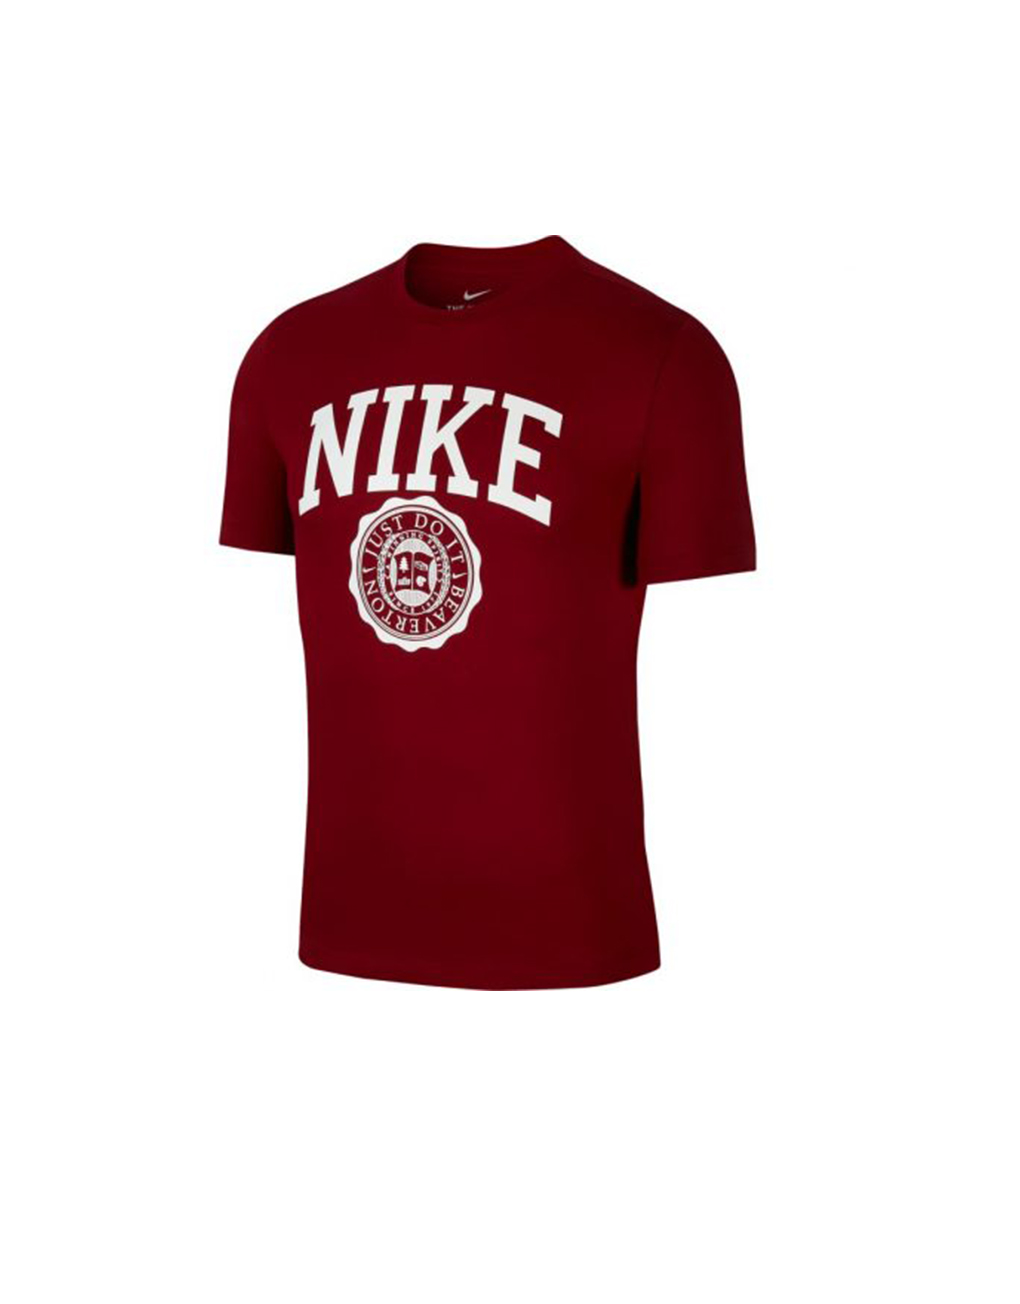 NIKE – Sportswear Team t-shirt